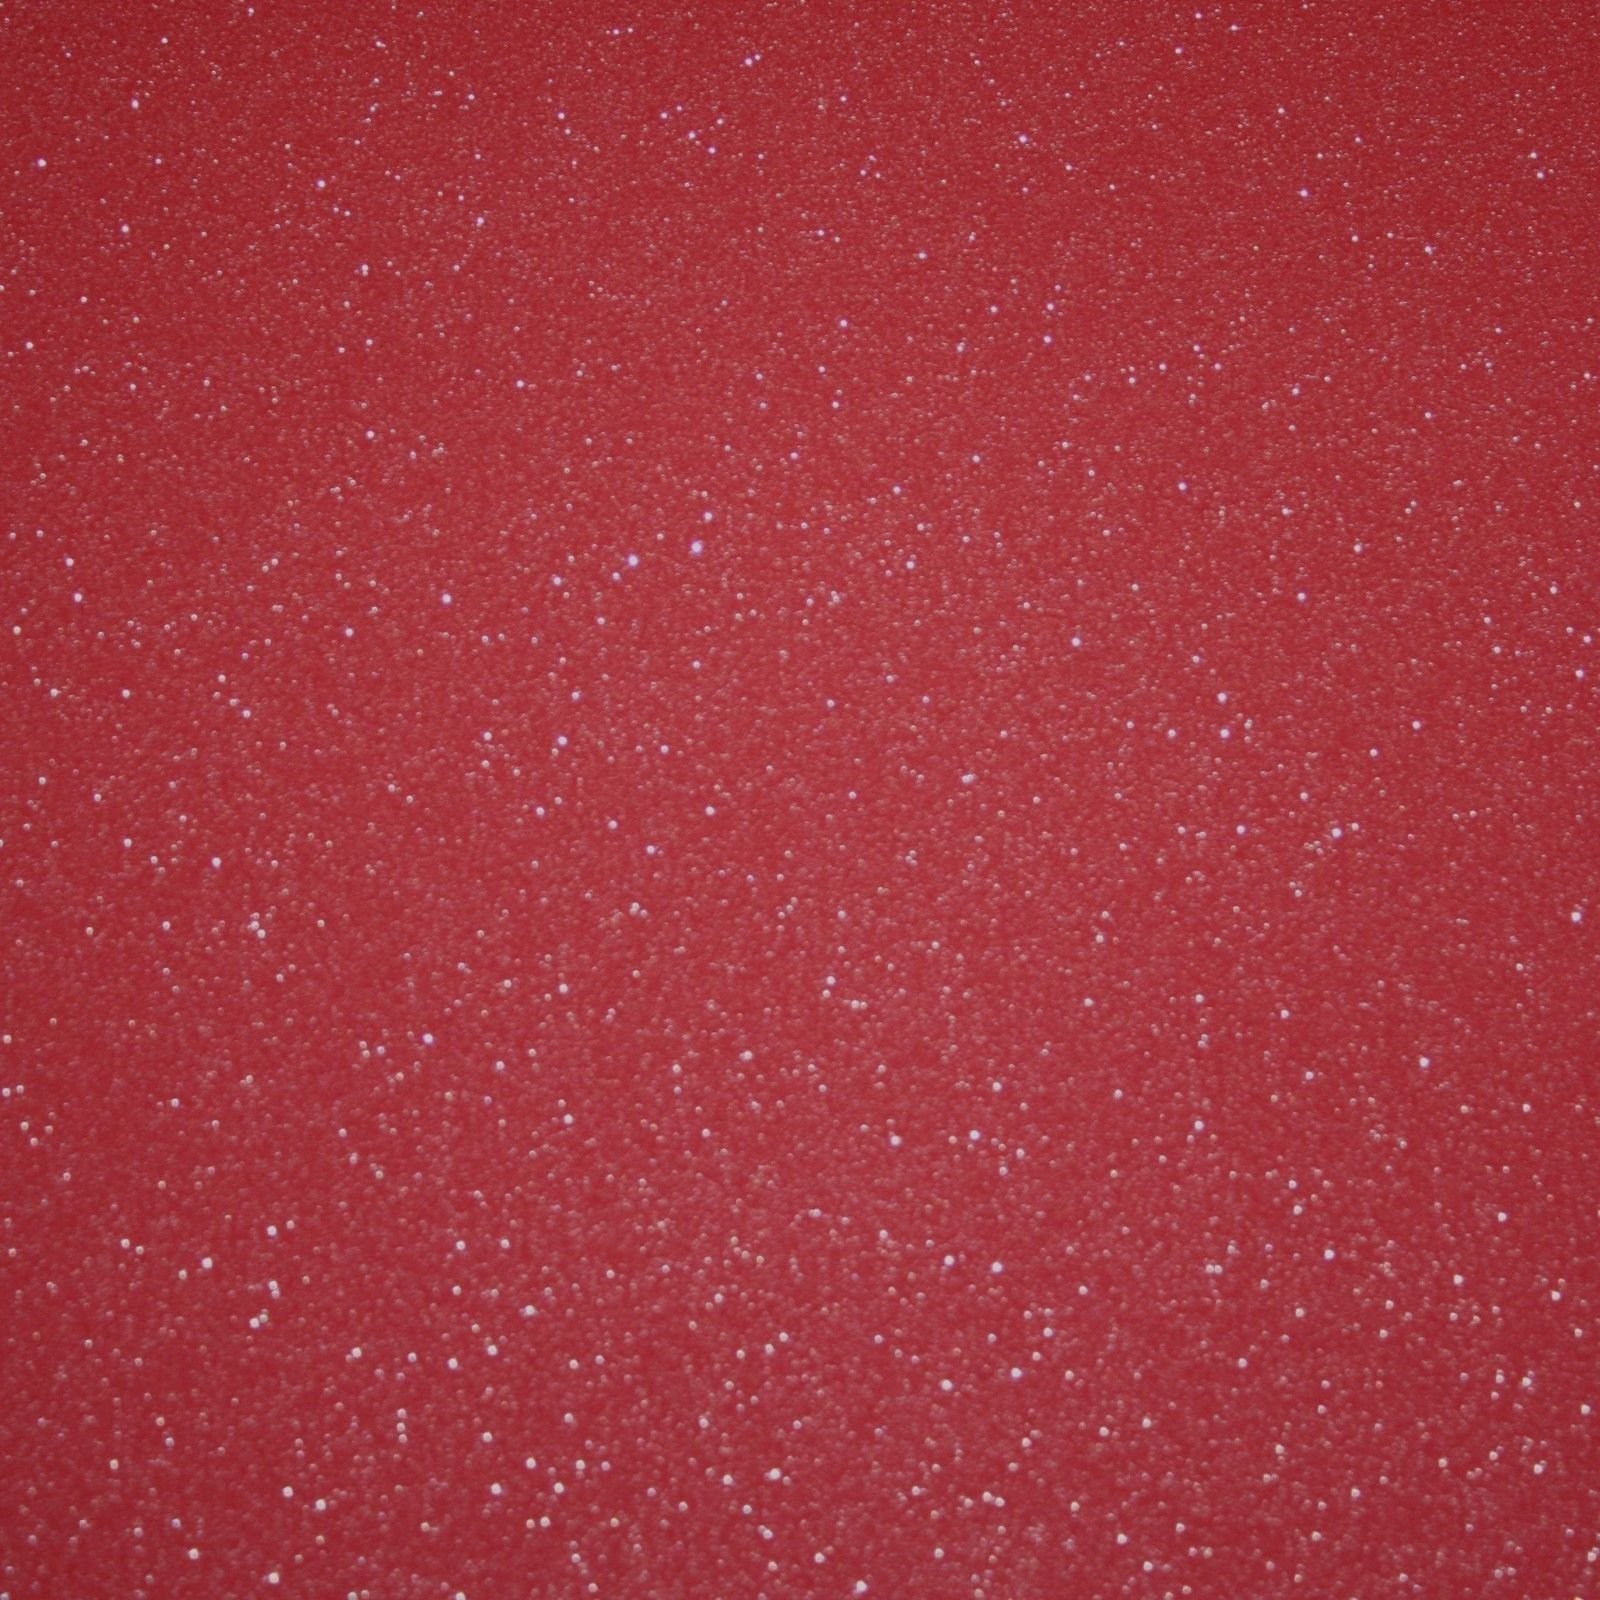 #P&S International #Sparkle Glitter Wallpaper #Red 02403-74